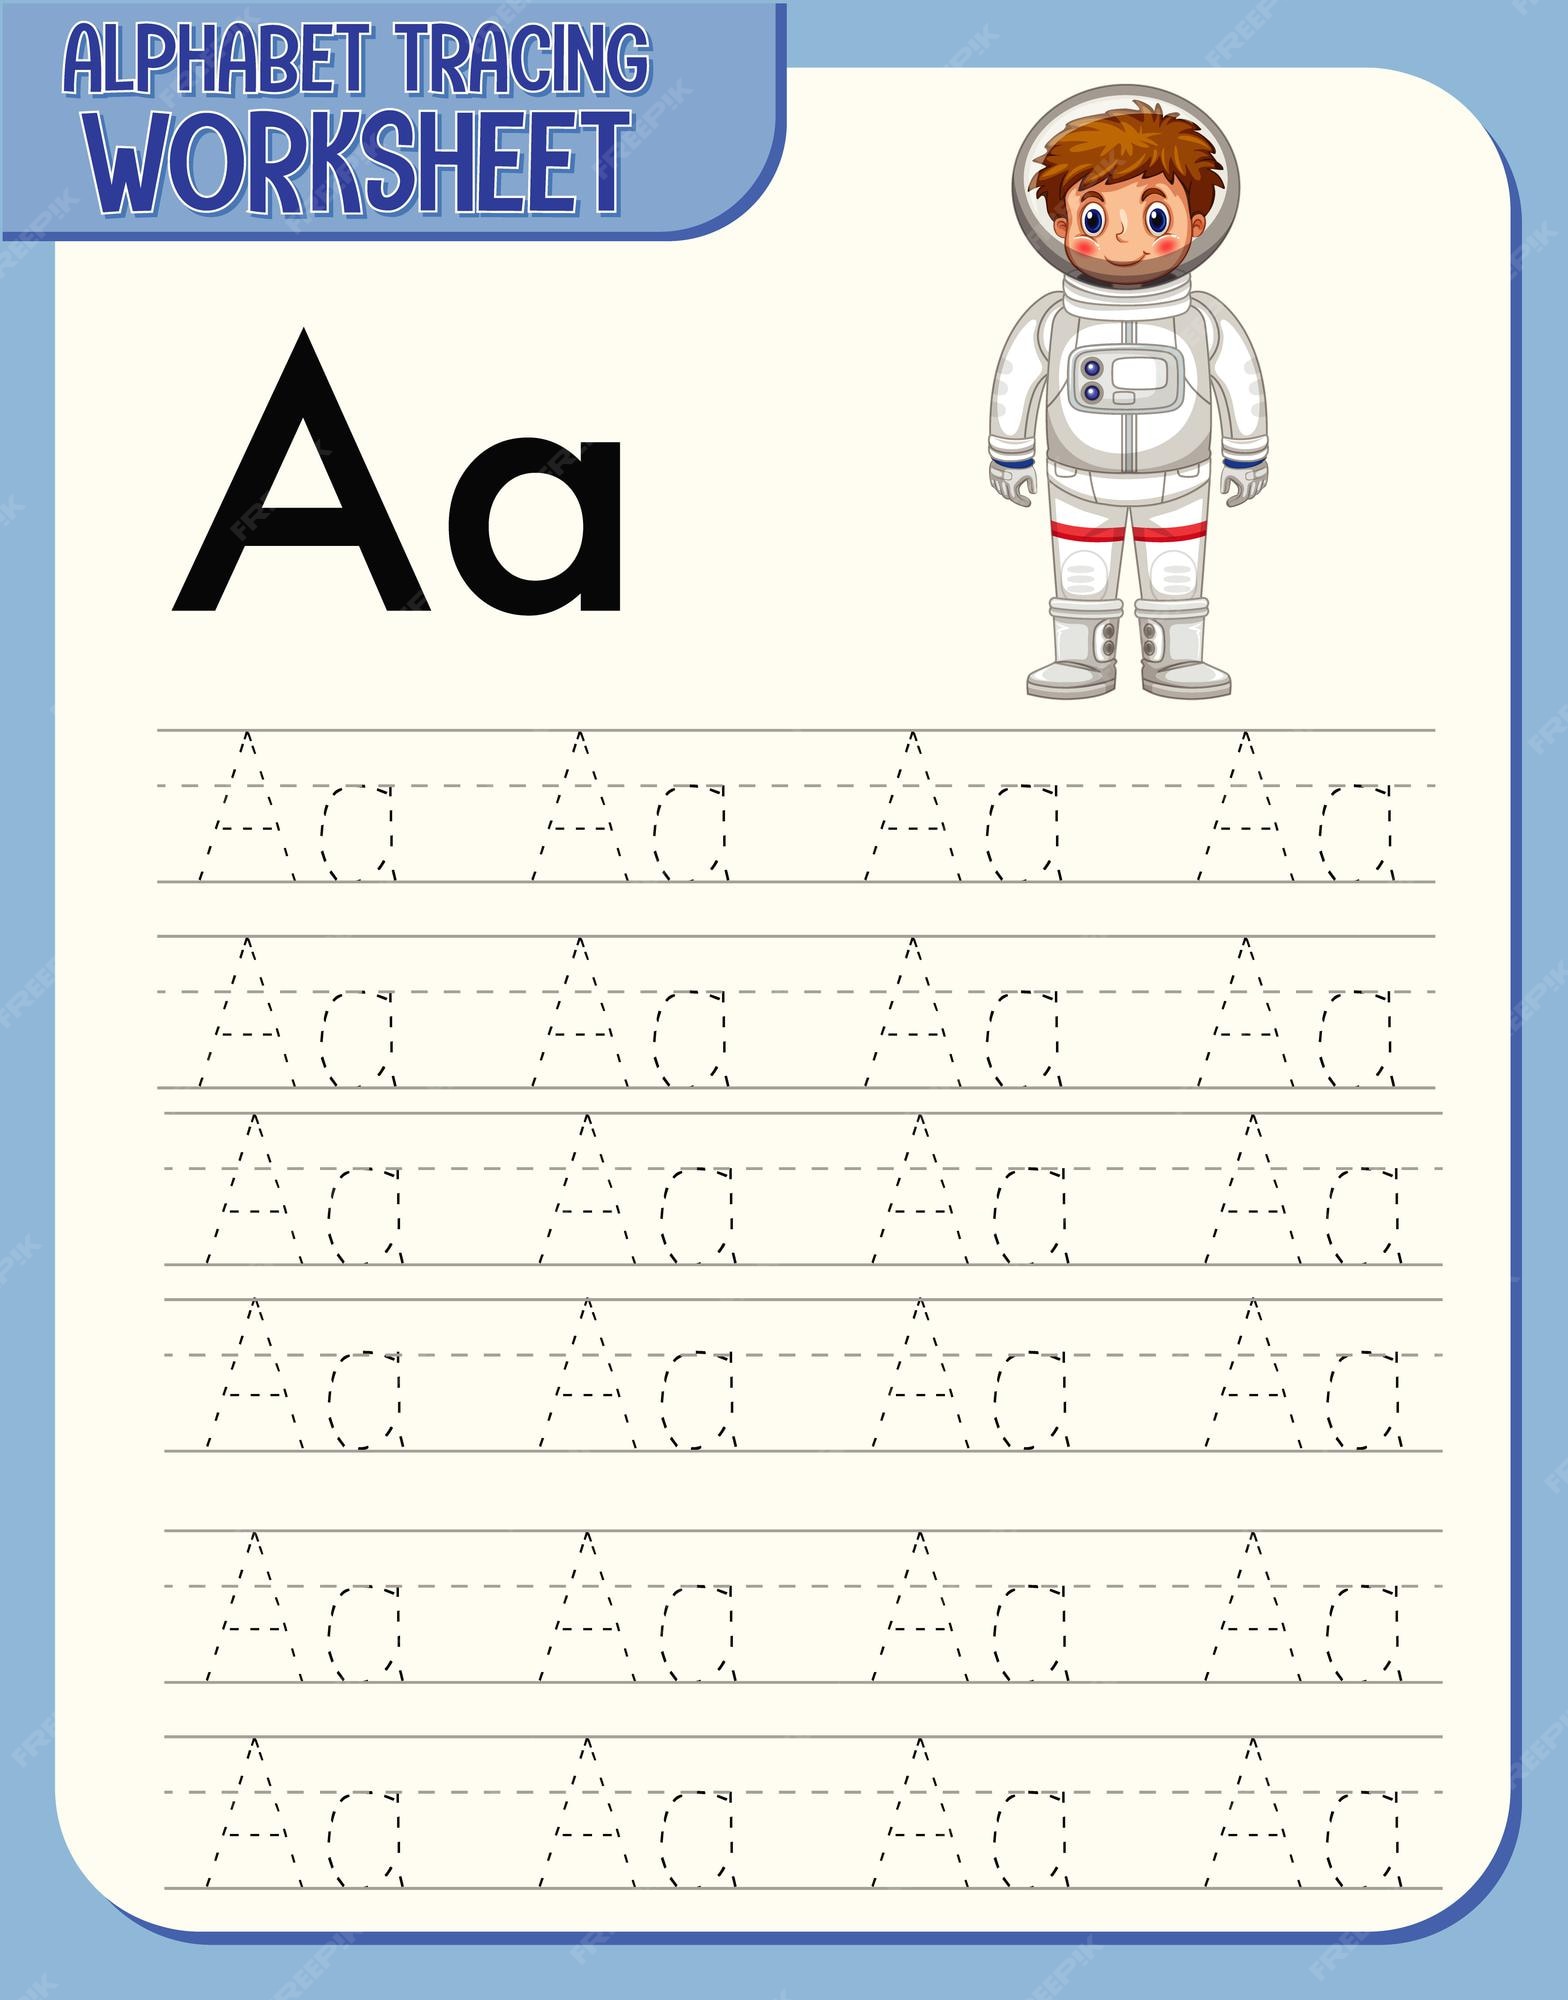 Webtools - English Alphabets Tracing Sheets